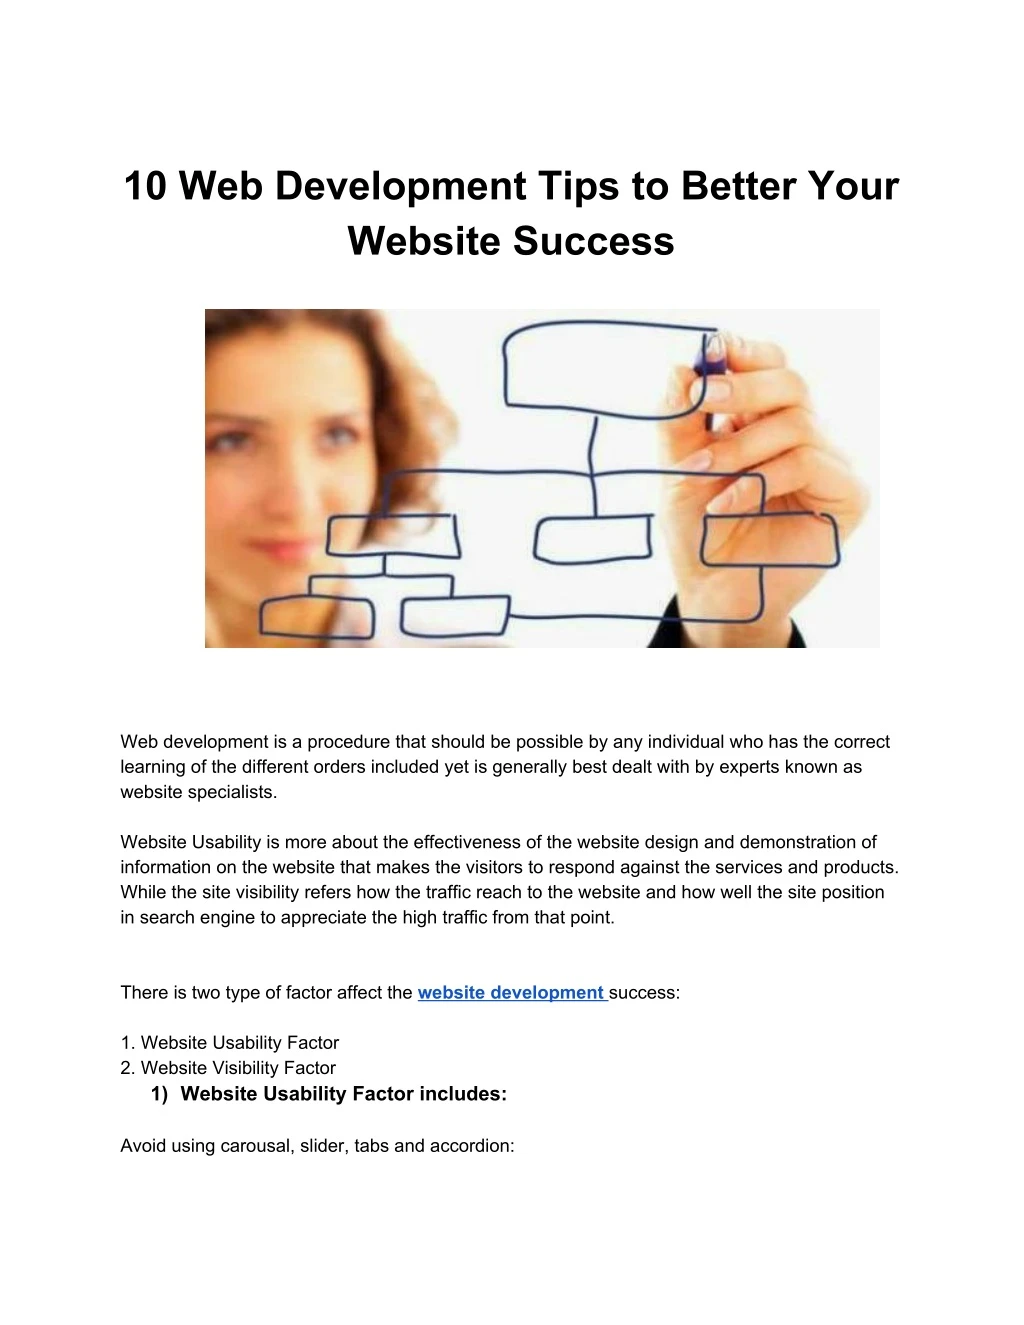 10 web development tips to better your website